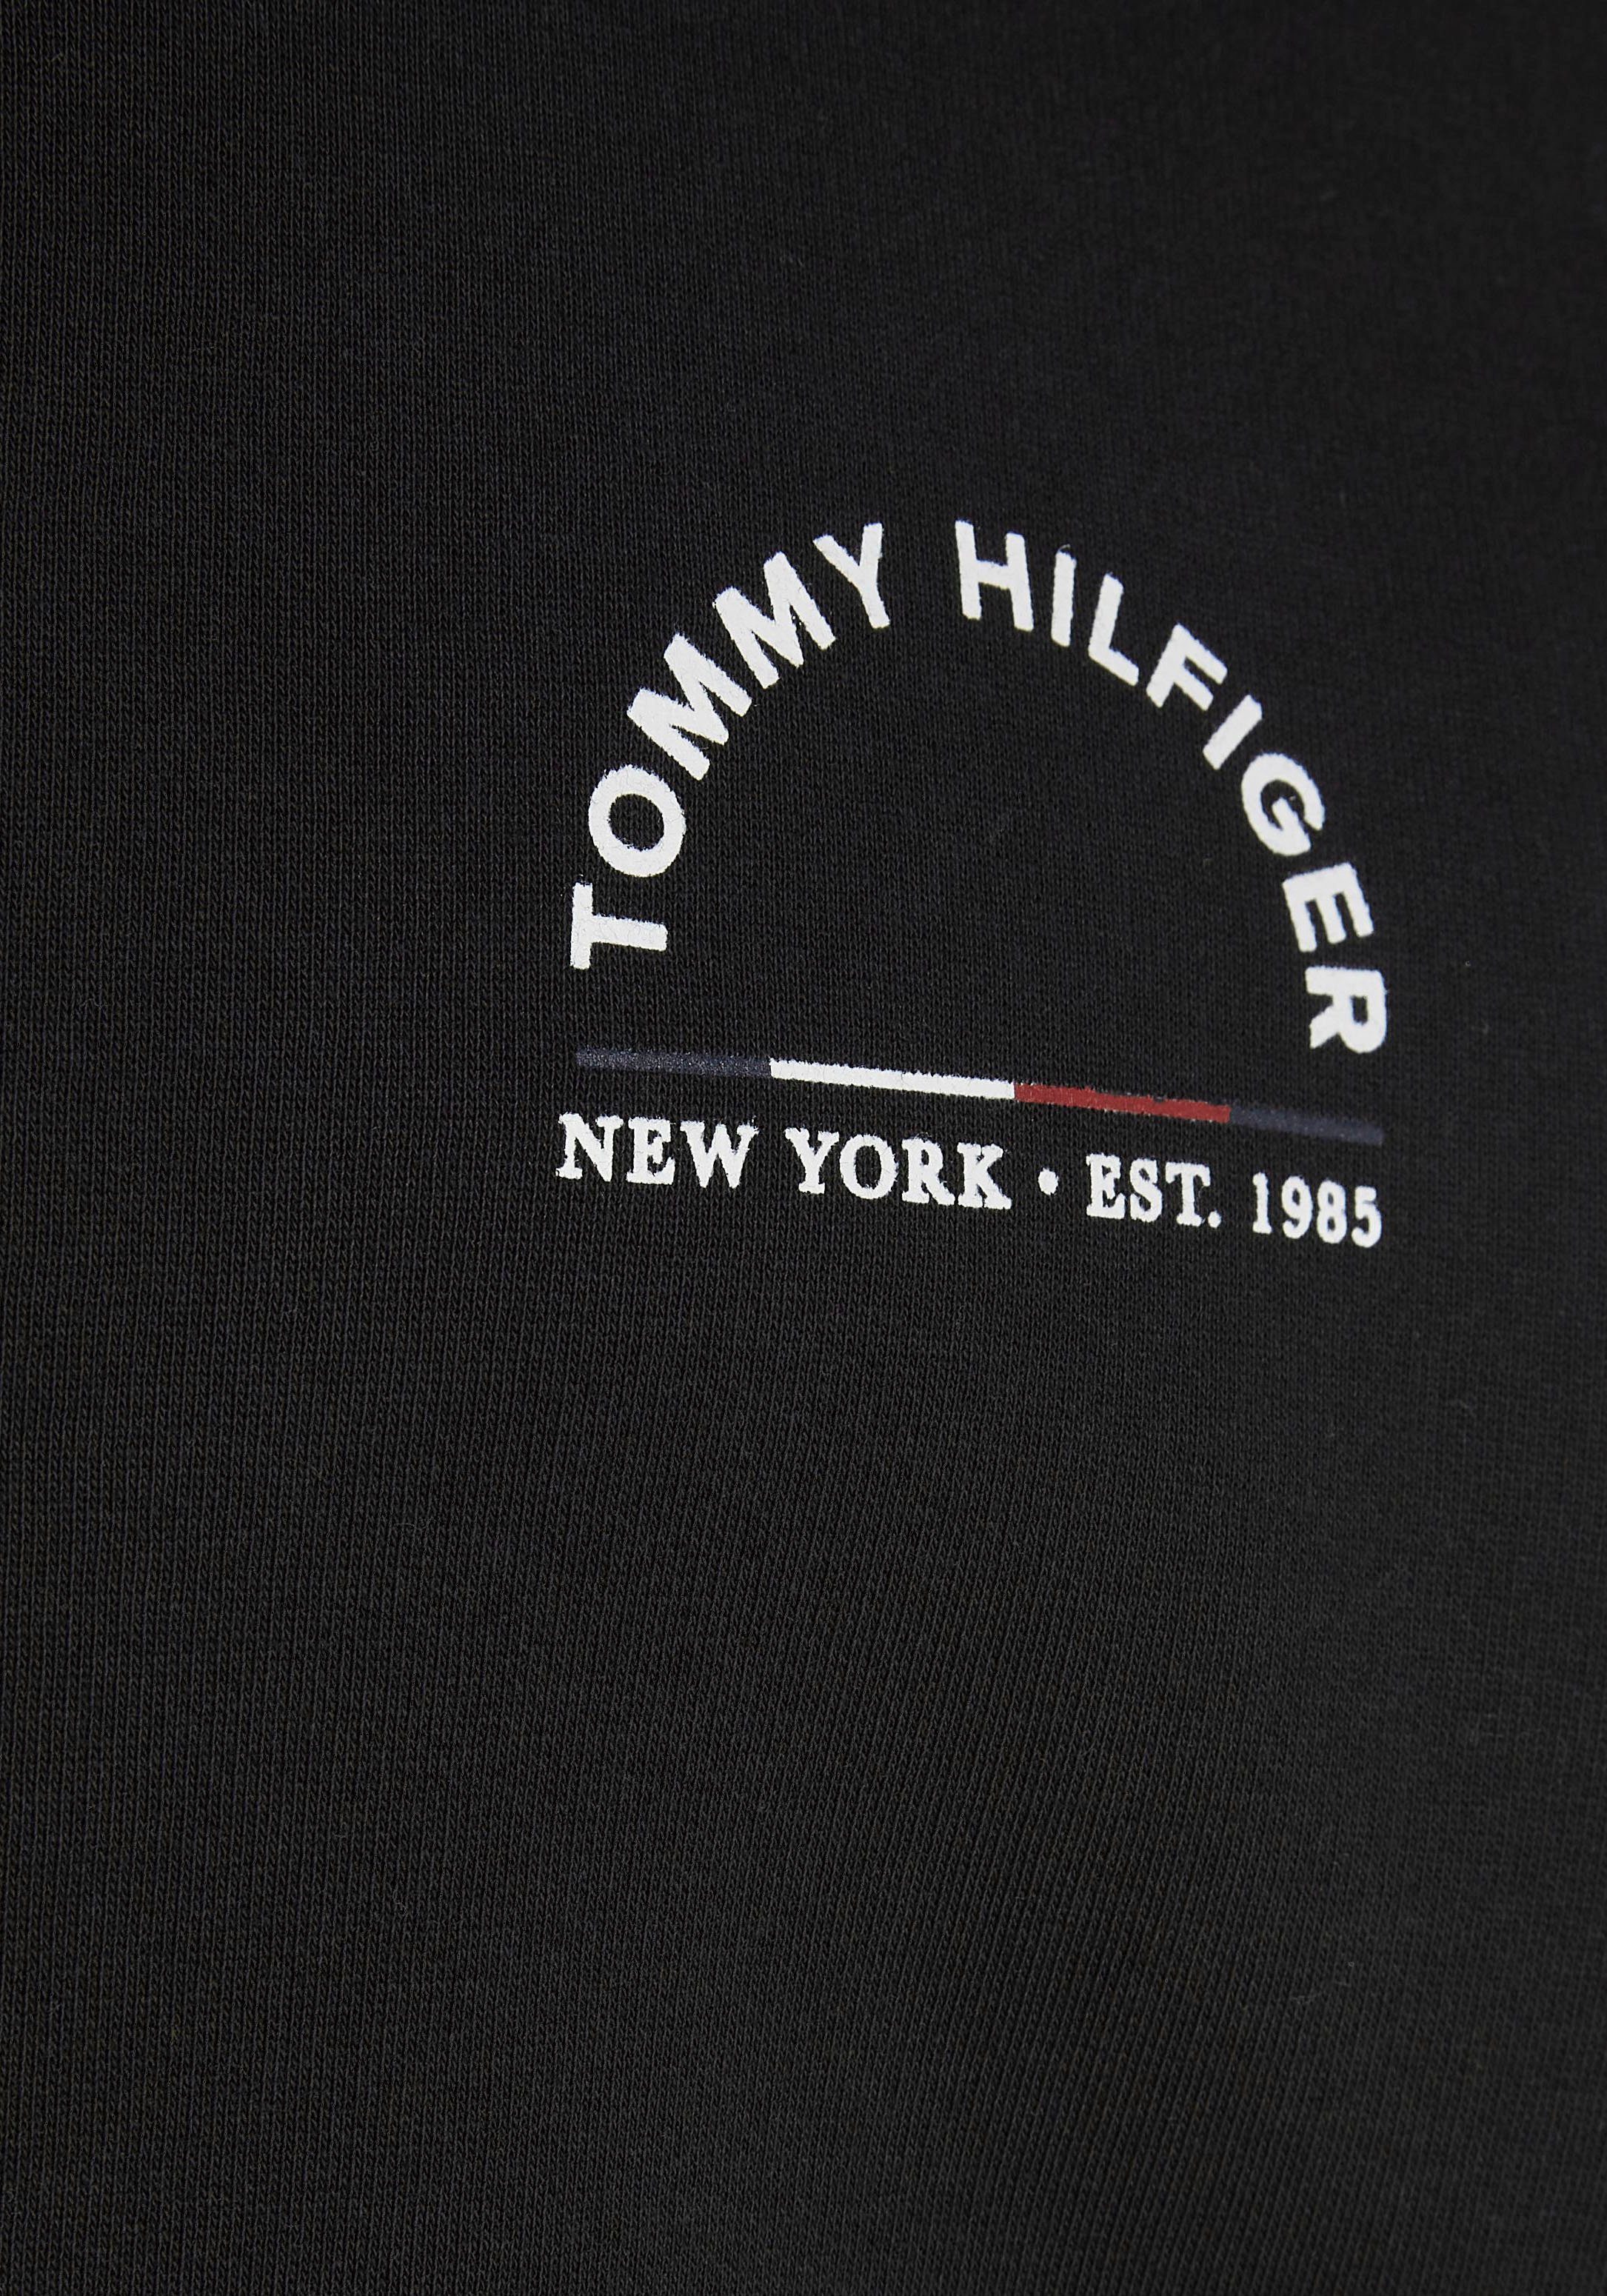 SWEATSHIRT REG HILFIGER SHADOW Sweatshirt Hilfiger Black Tommy